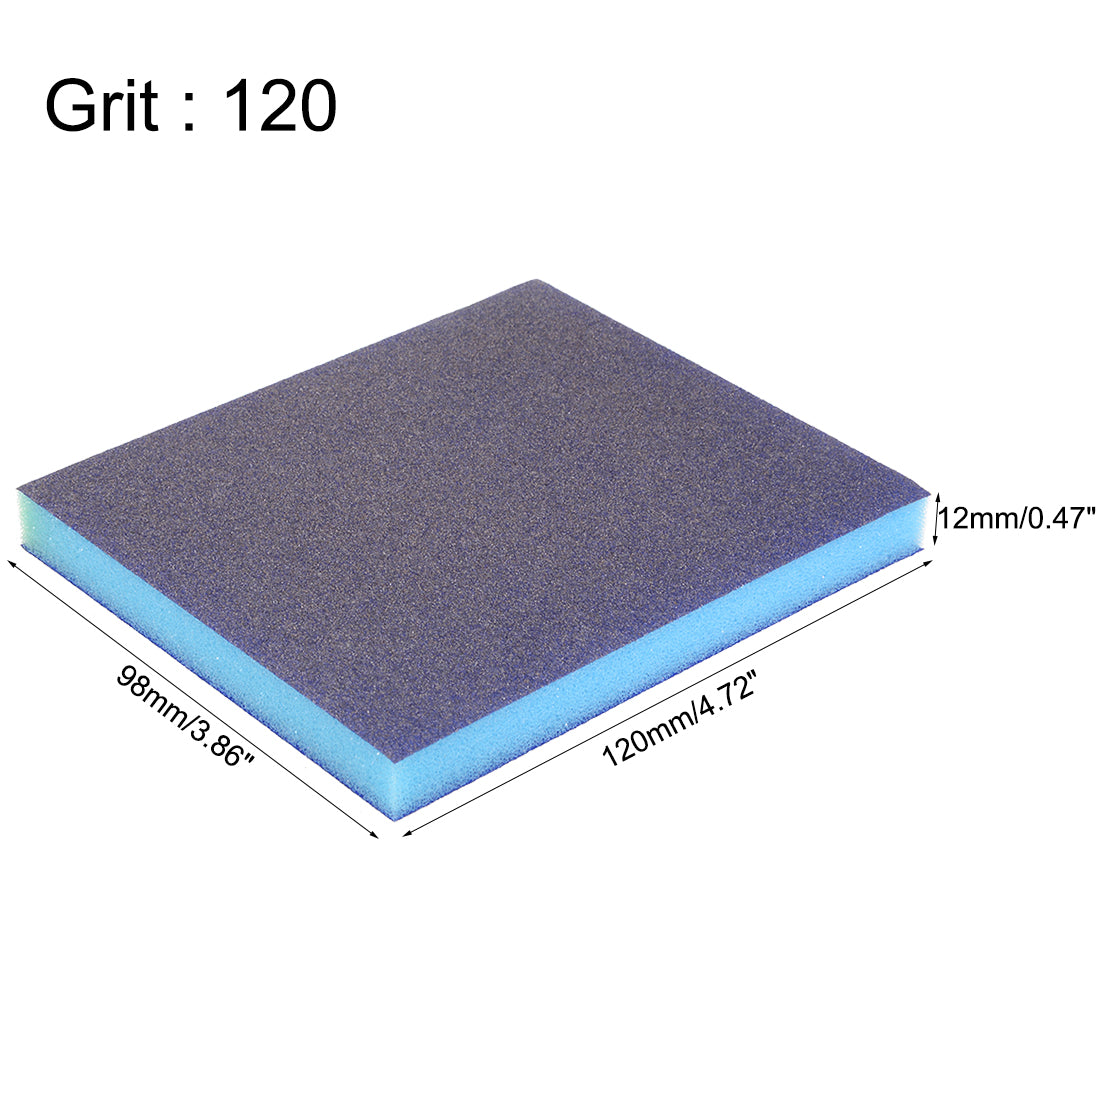 uxcell Uxcell Sanding Sponge, Medium Grit 120 Grit Sanding Block Pad, 4.72" x 3.86" x 0.47" Size  4pcs